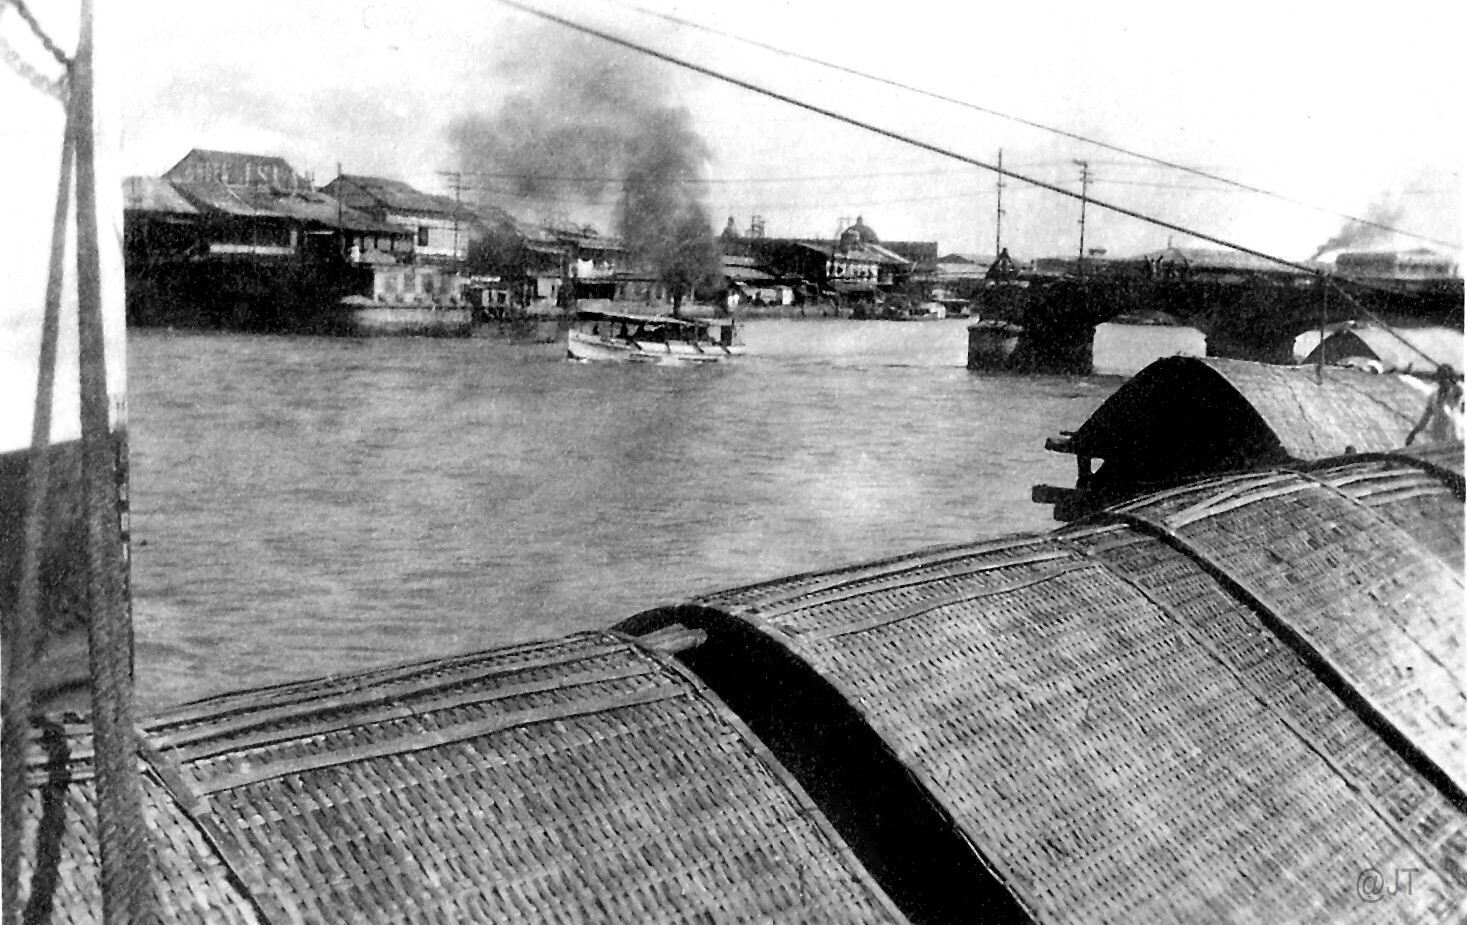 Flood damaged Bridge of Spain (Puente de España) over the Pasig River, Manila, Philippines, early 20th Century.